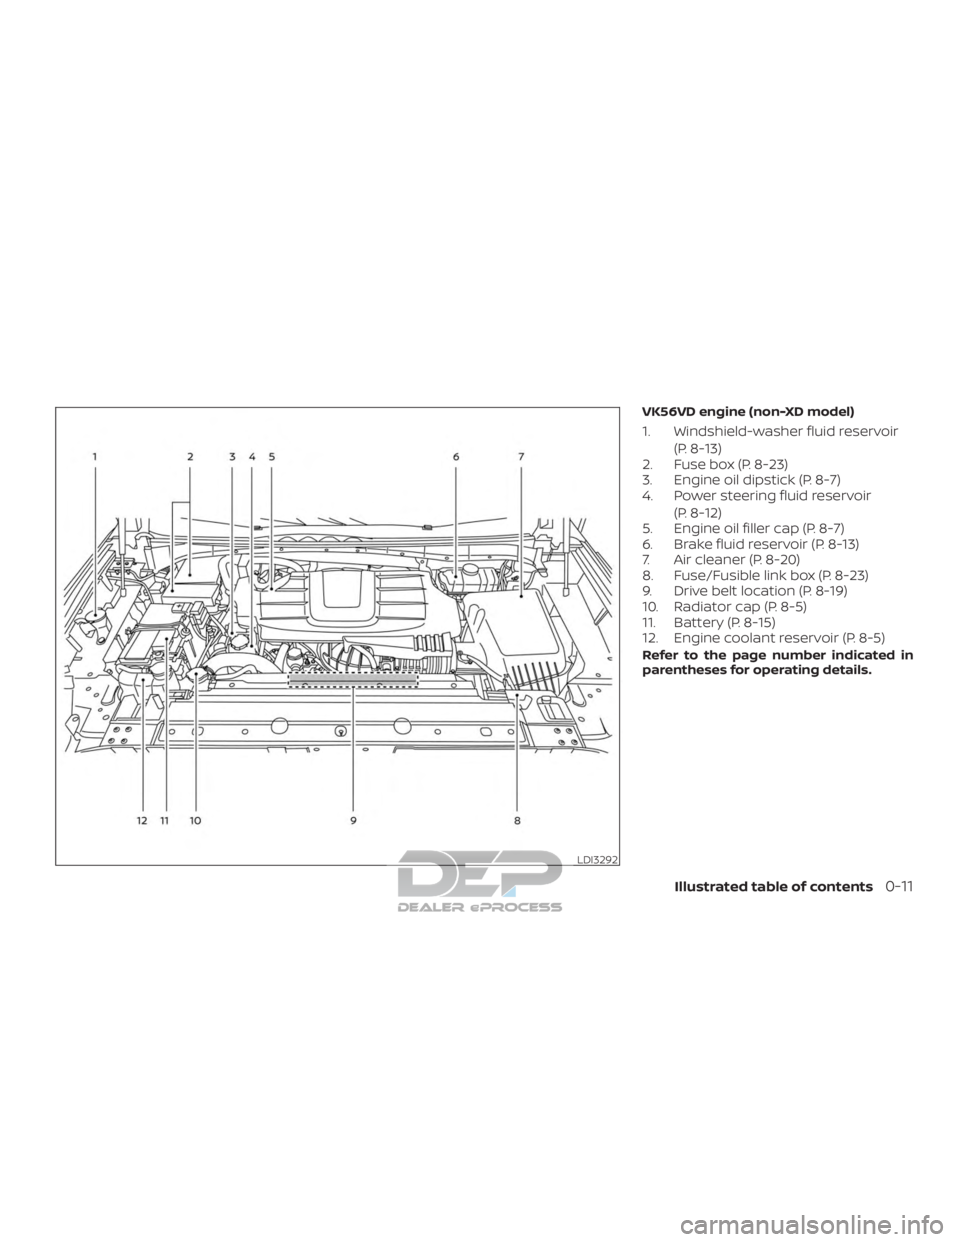 NISSAN TITAN 2019  Owner´s Manual VK56VD engine (non-XD model)
1. Windshield-washer fluid reservoir(P. 8-13)
2. Fuse box (P. 8-23)
3. Engine oil dipstick (P. 8-7)
4. Power steering fluid reservoir
(P. 8-12)
5. Engine oil filler cap (P